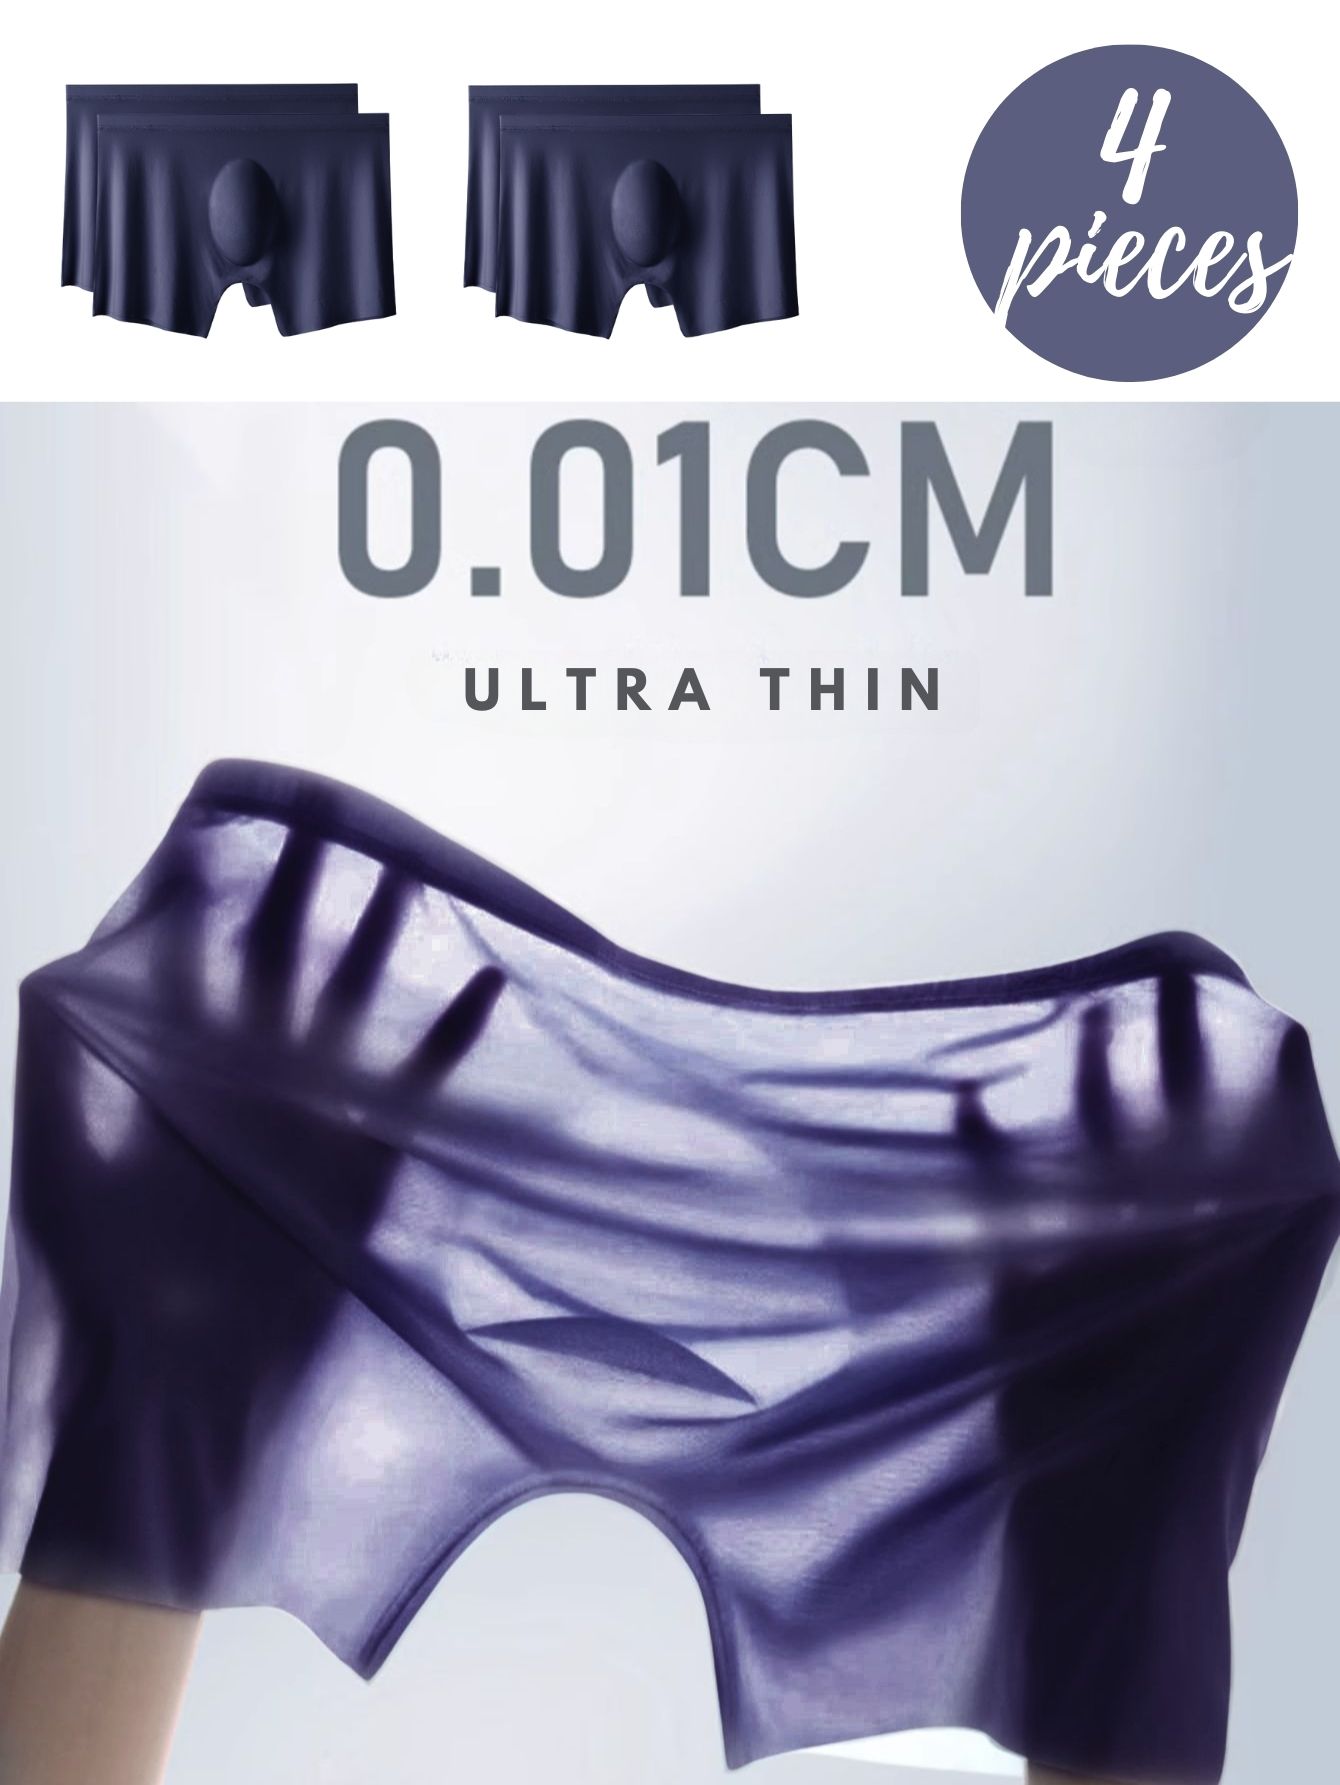 Men's Casual Ice Silk Breathable Underwear Thin Boxer Briefs Cool